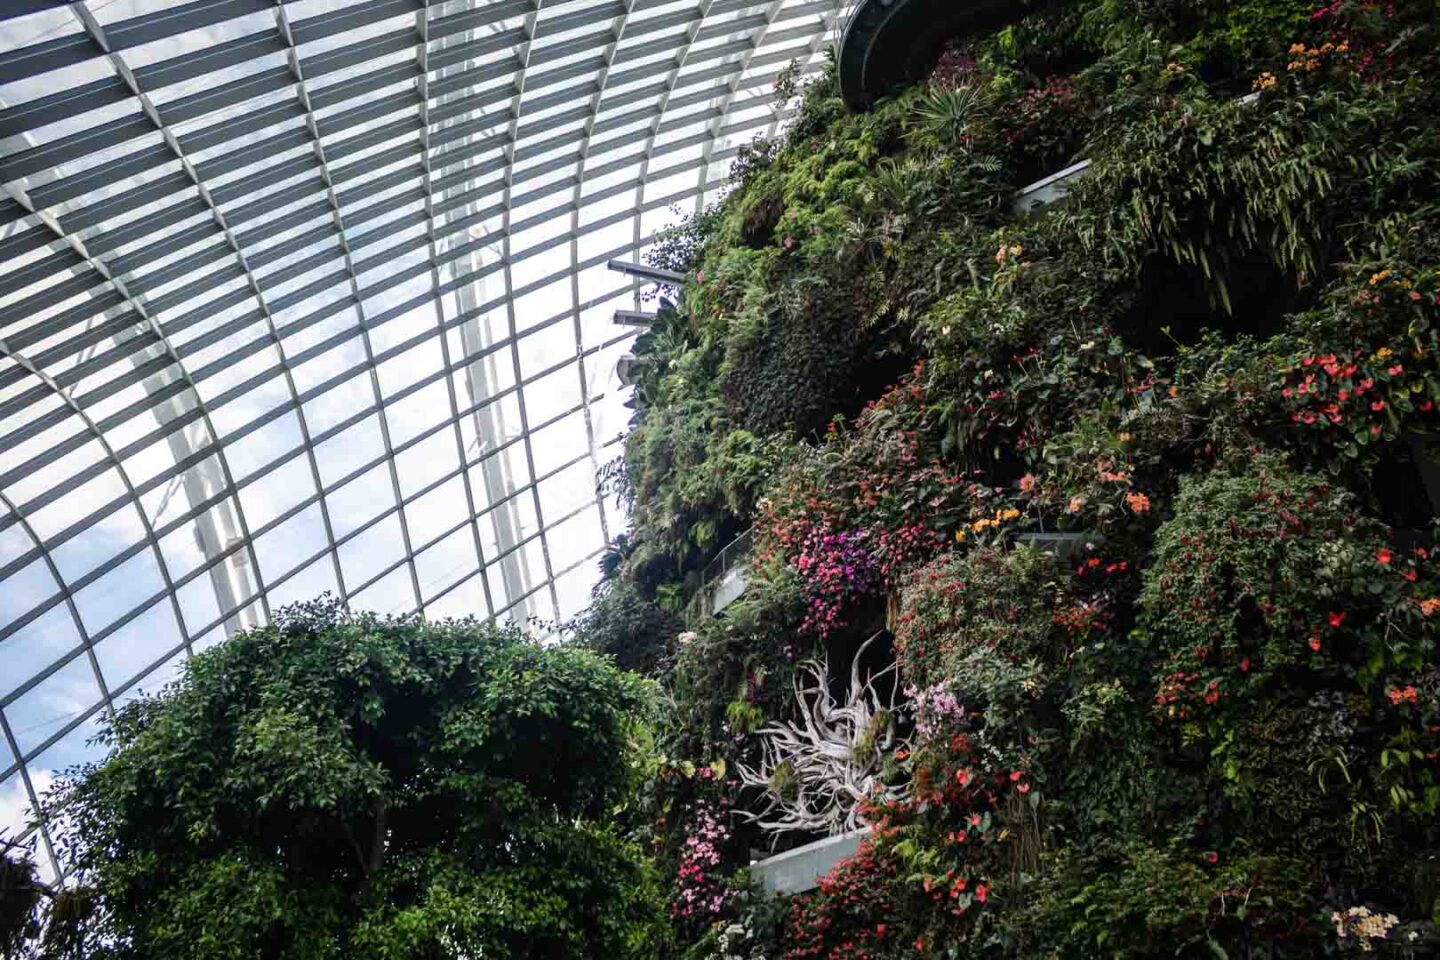 Singapore sustainability efforts, Flower Dome